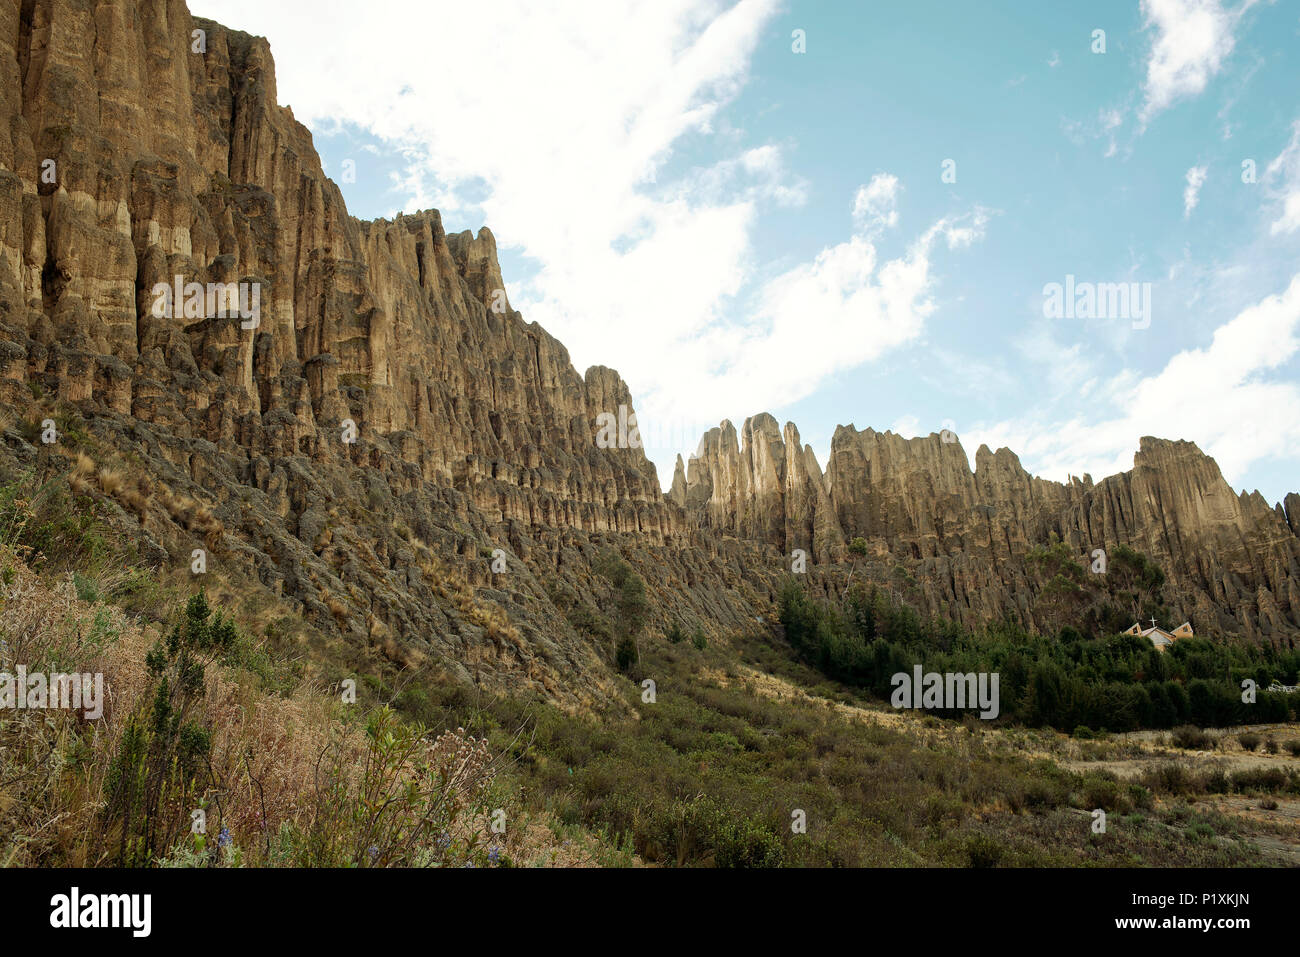 Natur wunderbare Lehm Kunstwerke durch Winderosion, Regen, Sonne geschnitzt, etc. Valle de las Animas (La Paz); Bolivien. Stockfoto